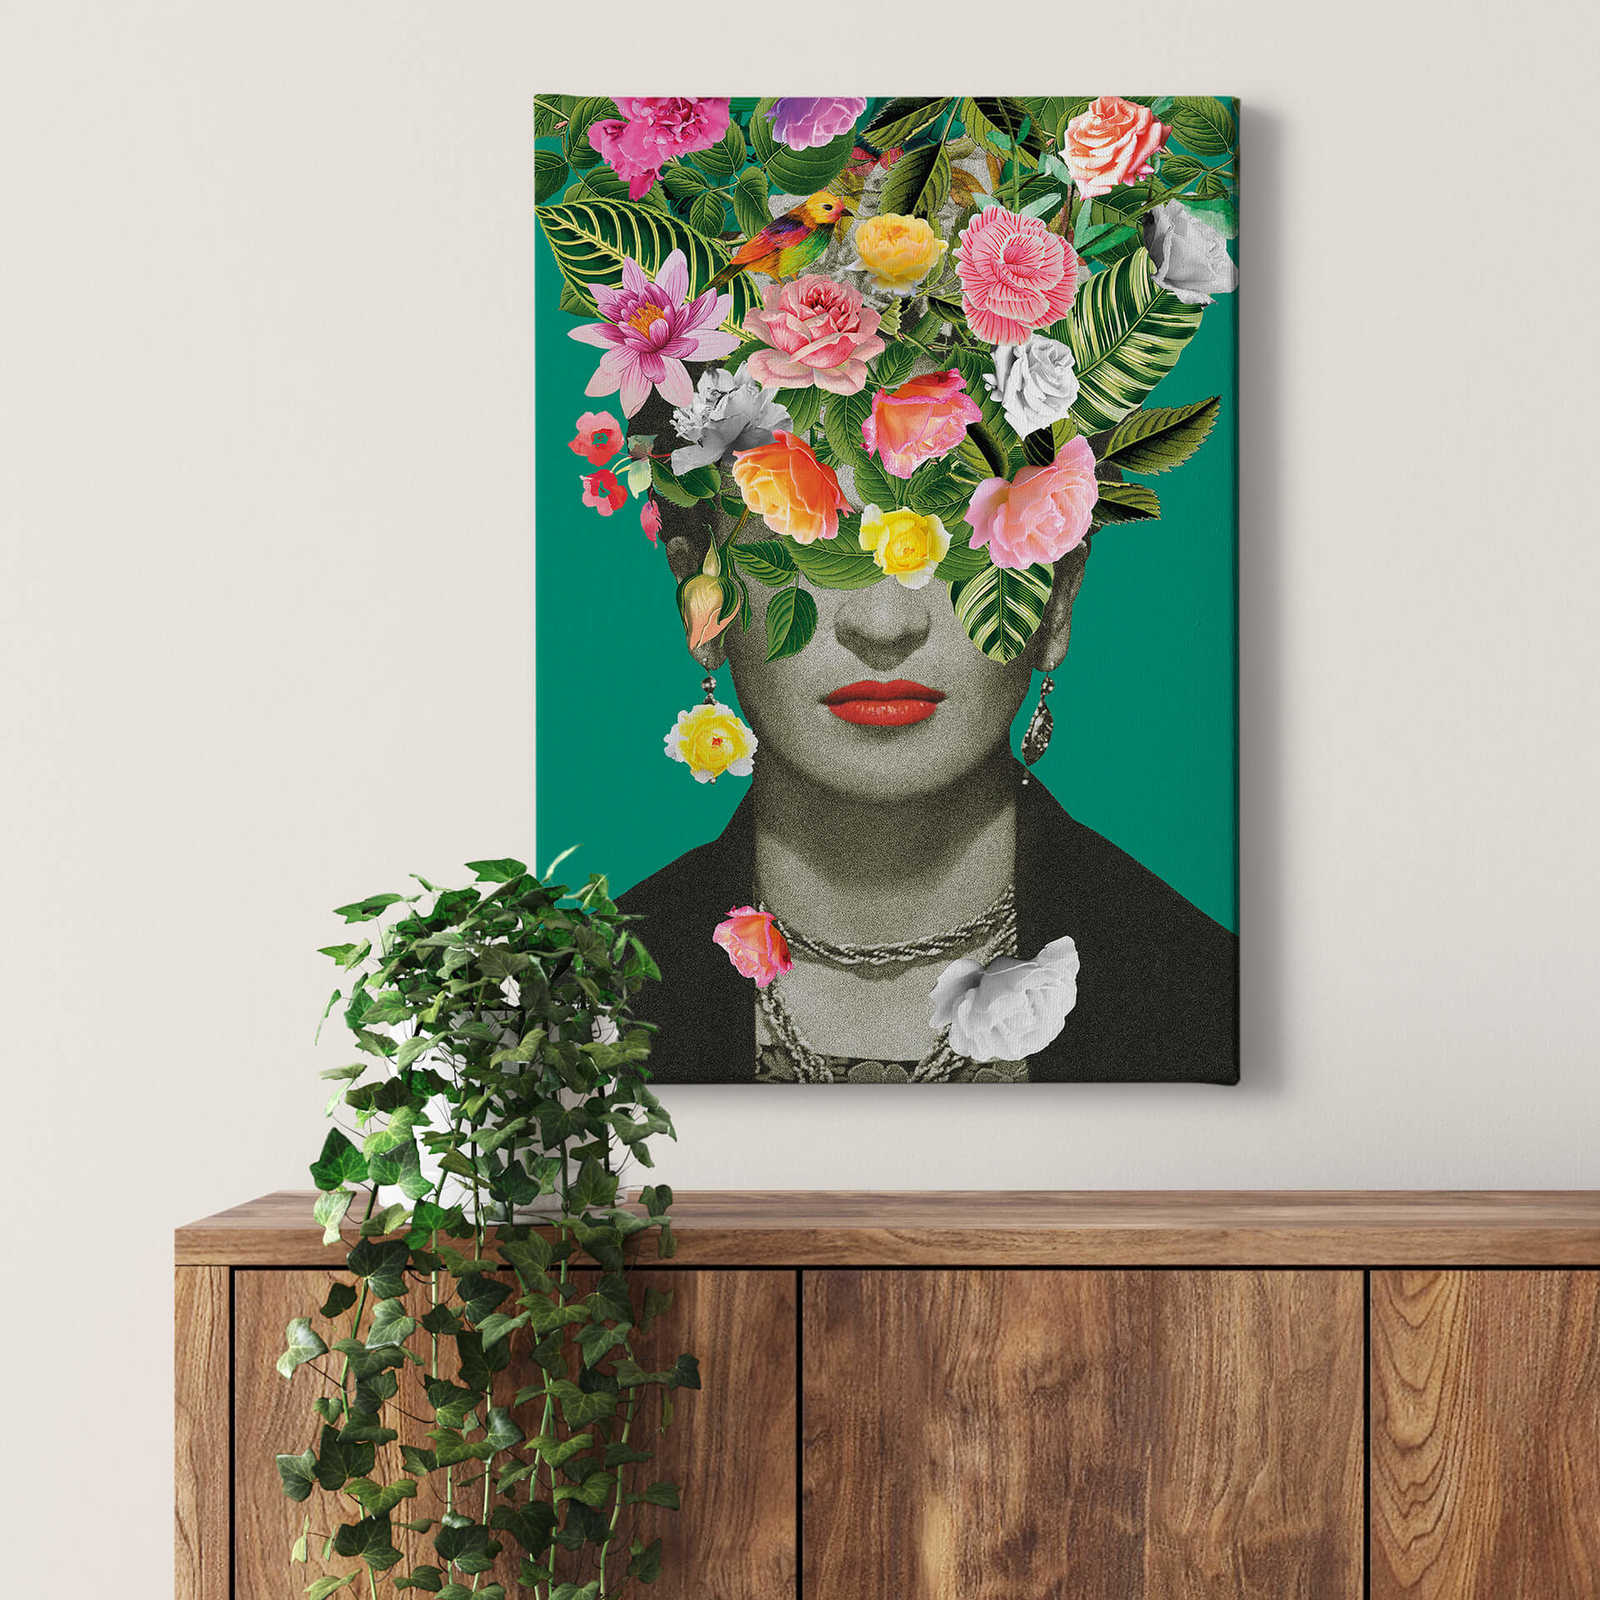             Canvas print "Frieda flowery" by Feldmann, flower collage
        